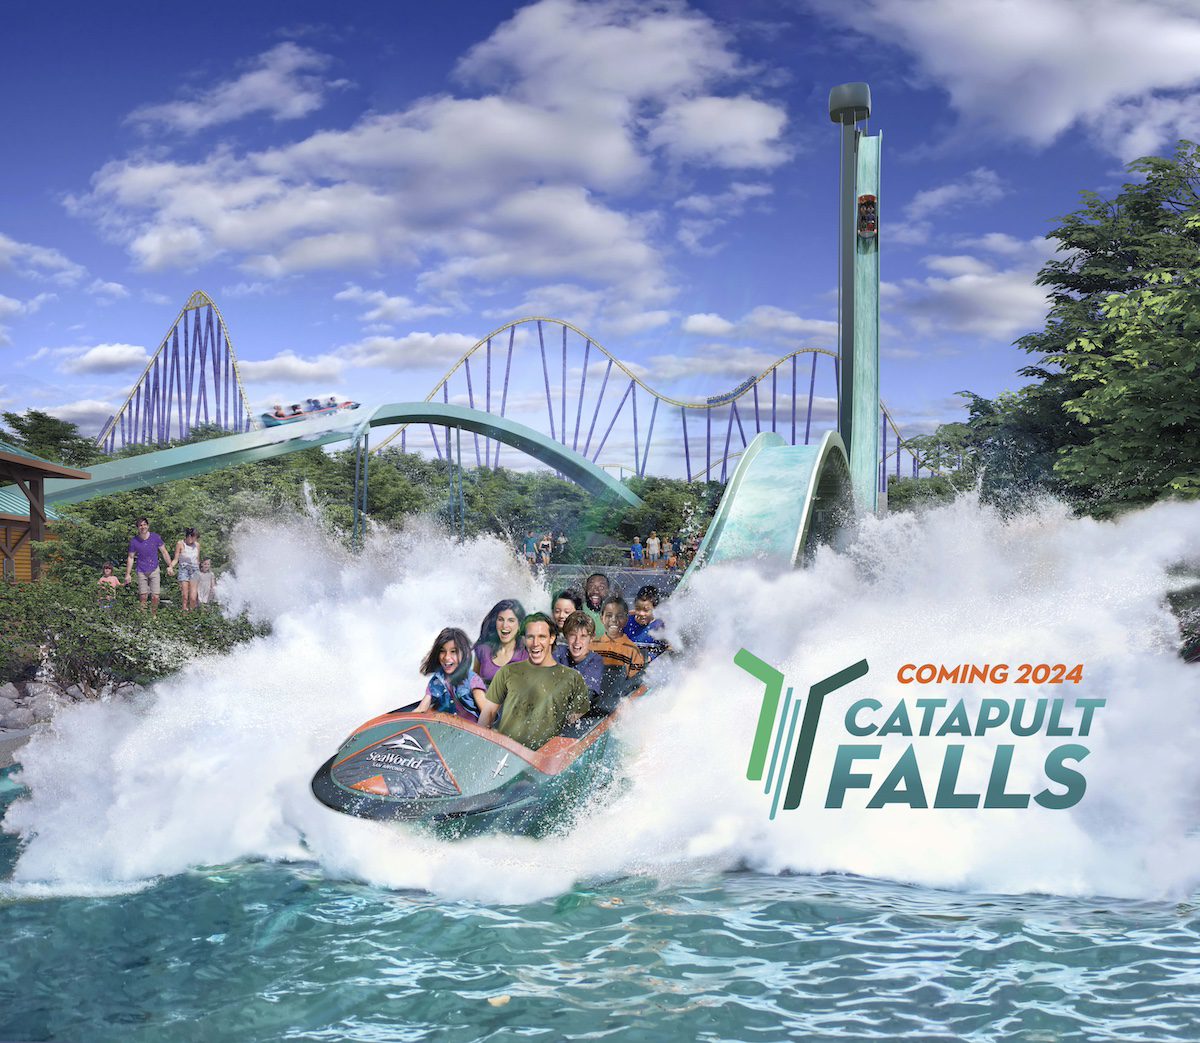 Catapult Falls